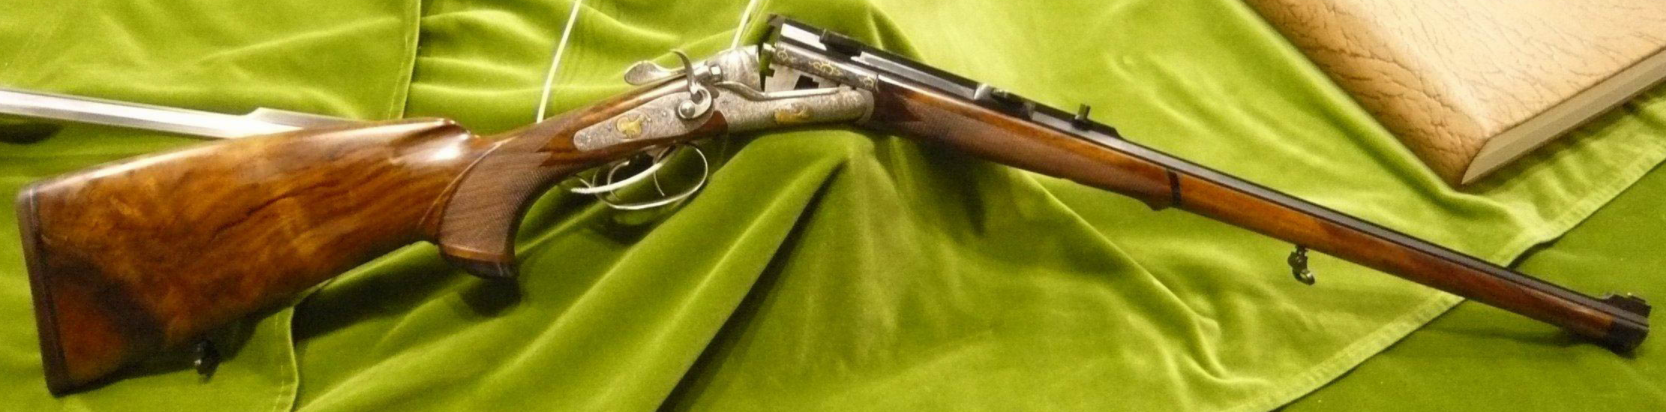 Jakob Koschat Hammer Rifle.